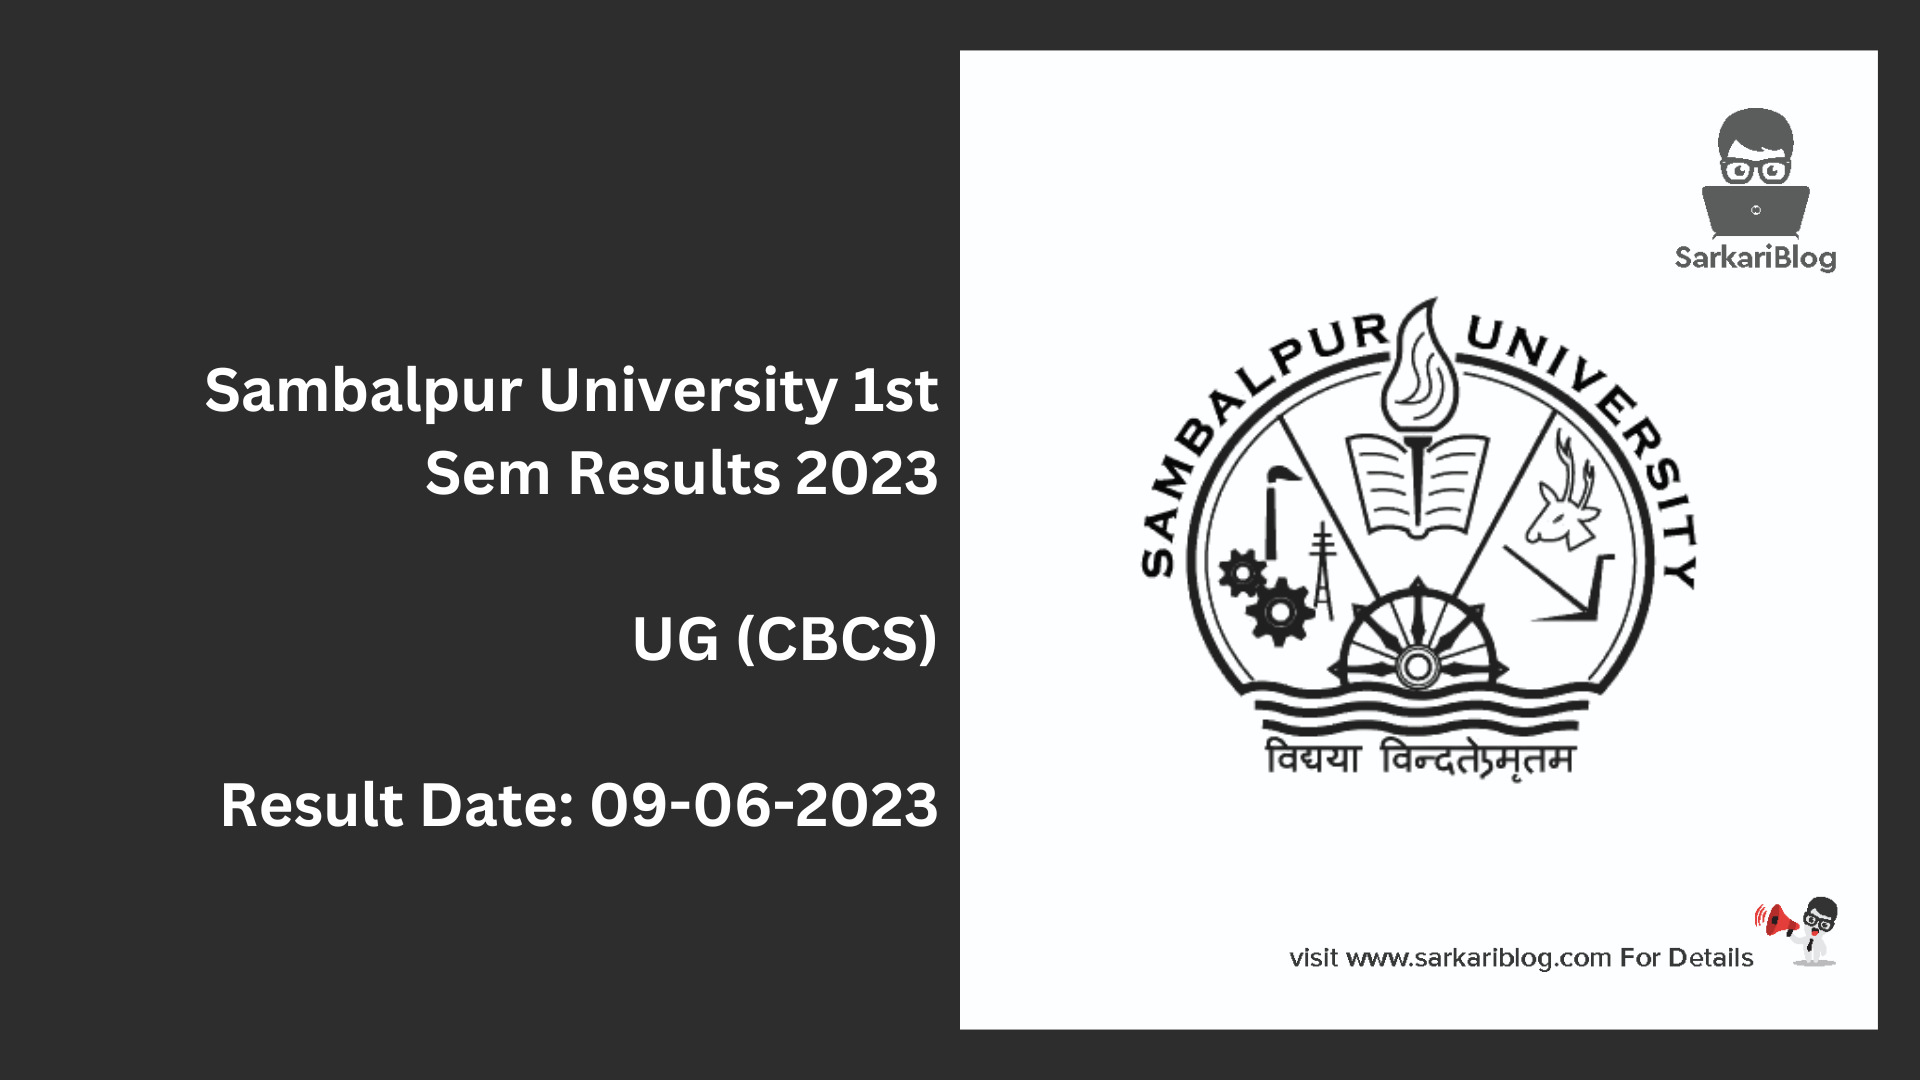 Sambalpur University 1st Sem Results 2023